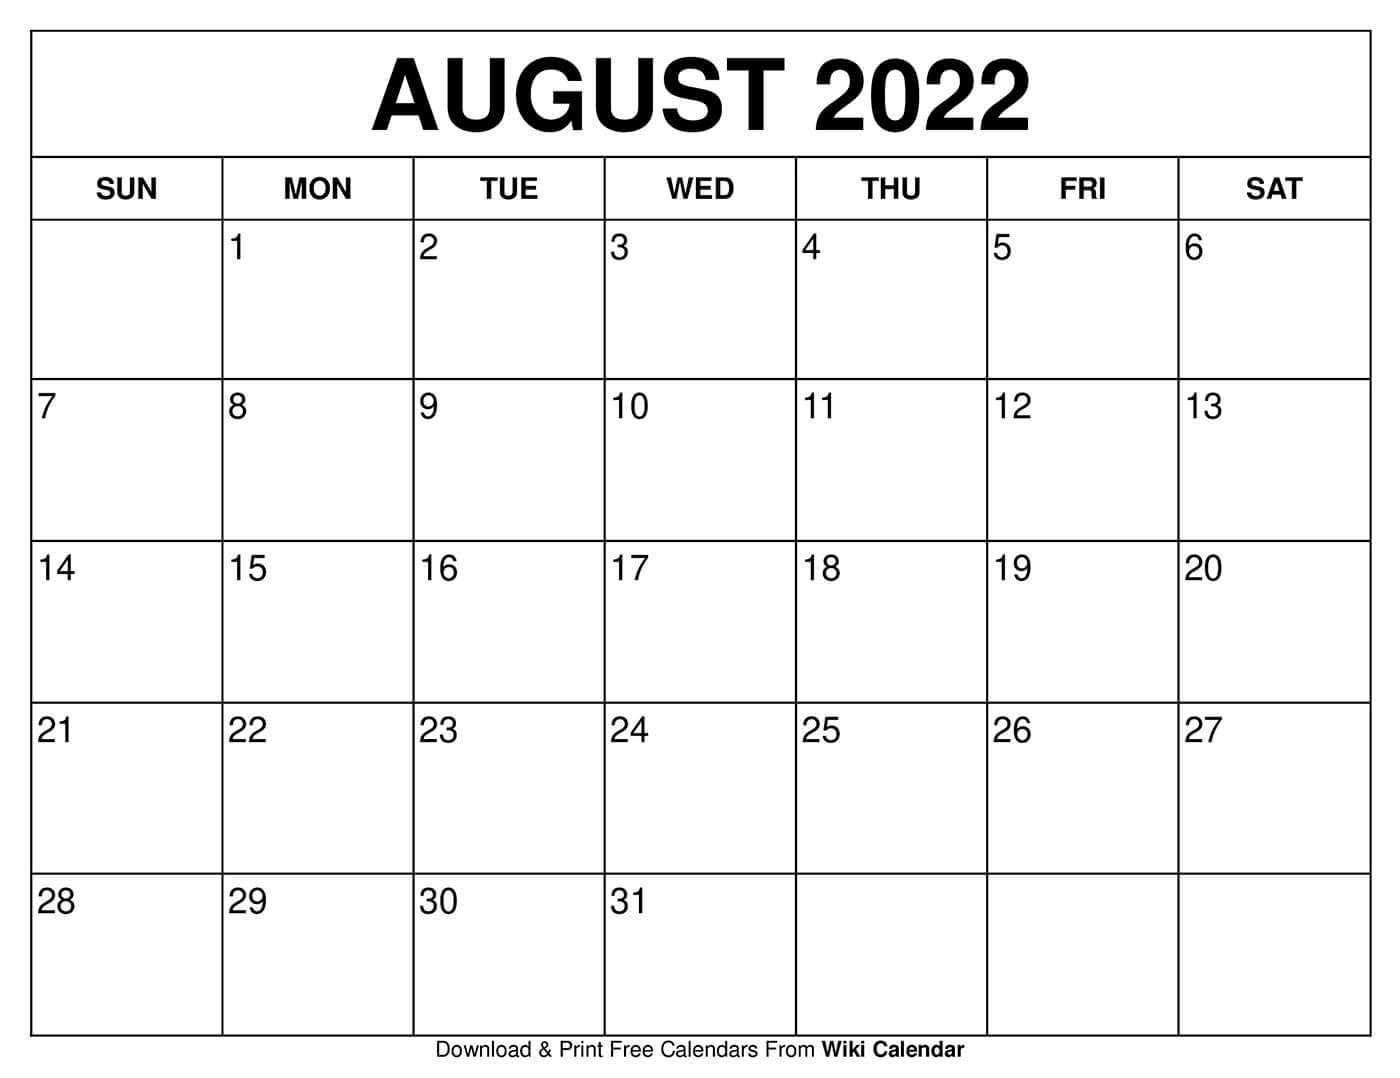 Free Printable August 2022 Calendar Free Printable August 2022 Calendars - Wiki Calendar